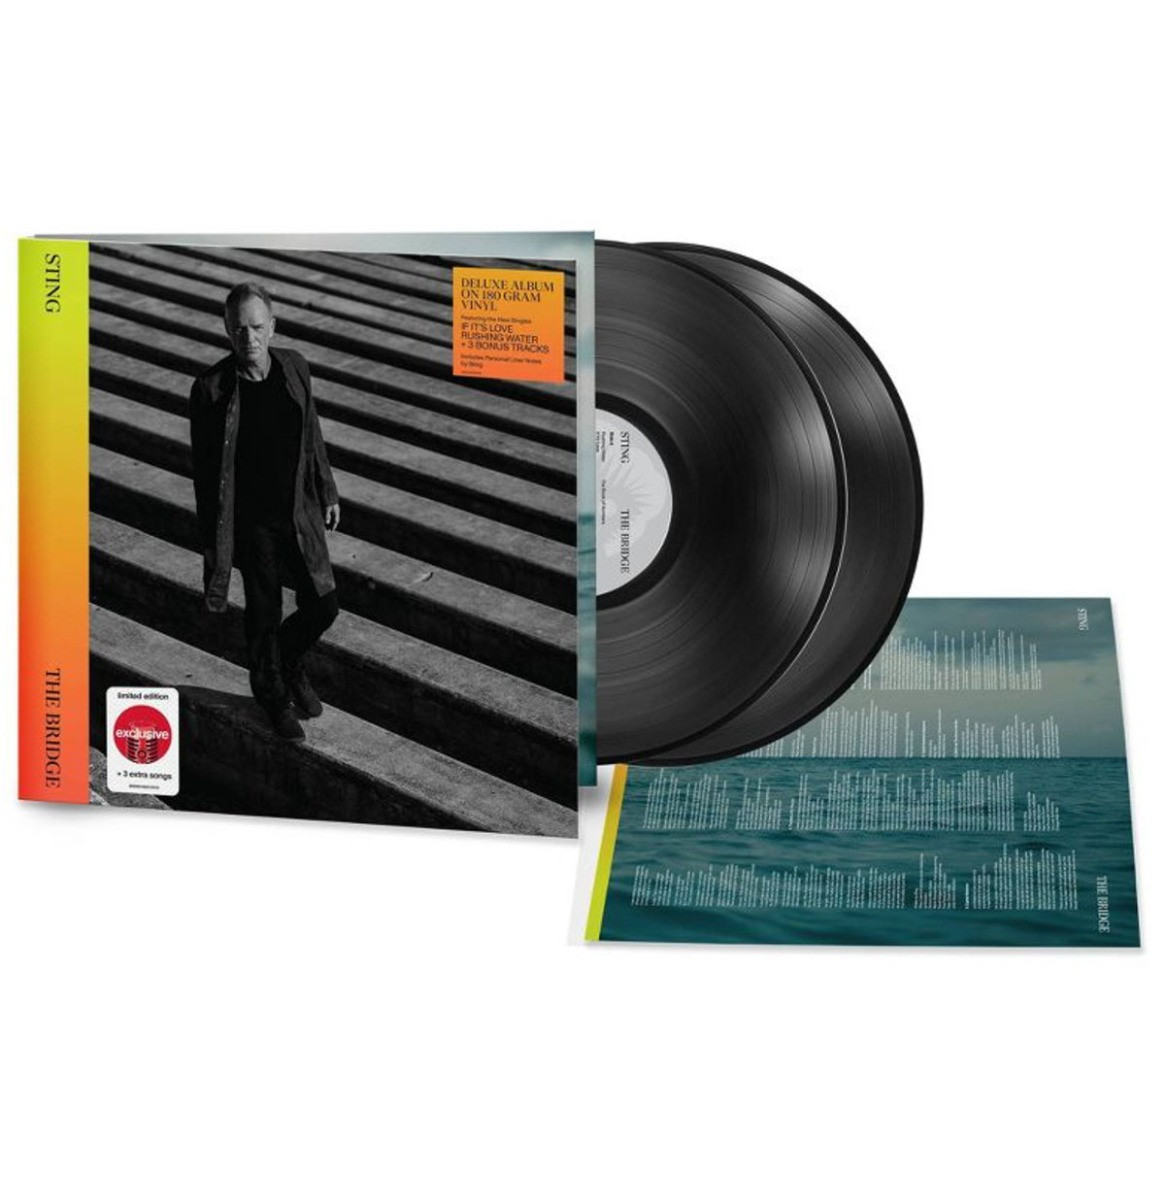 Sting - The Bridge (3 Extra Songs) (Target Exclusive) 2LP